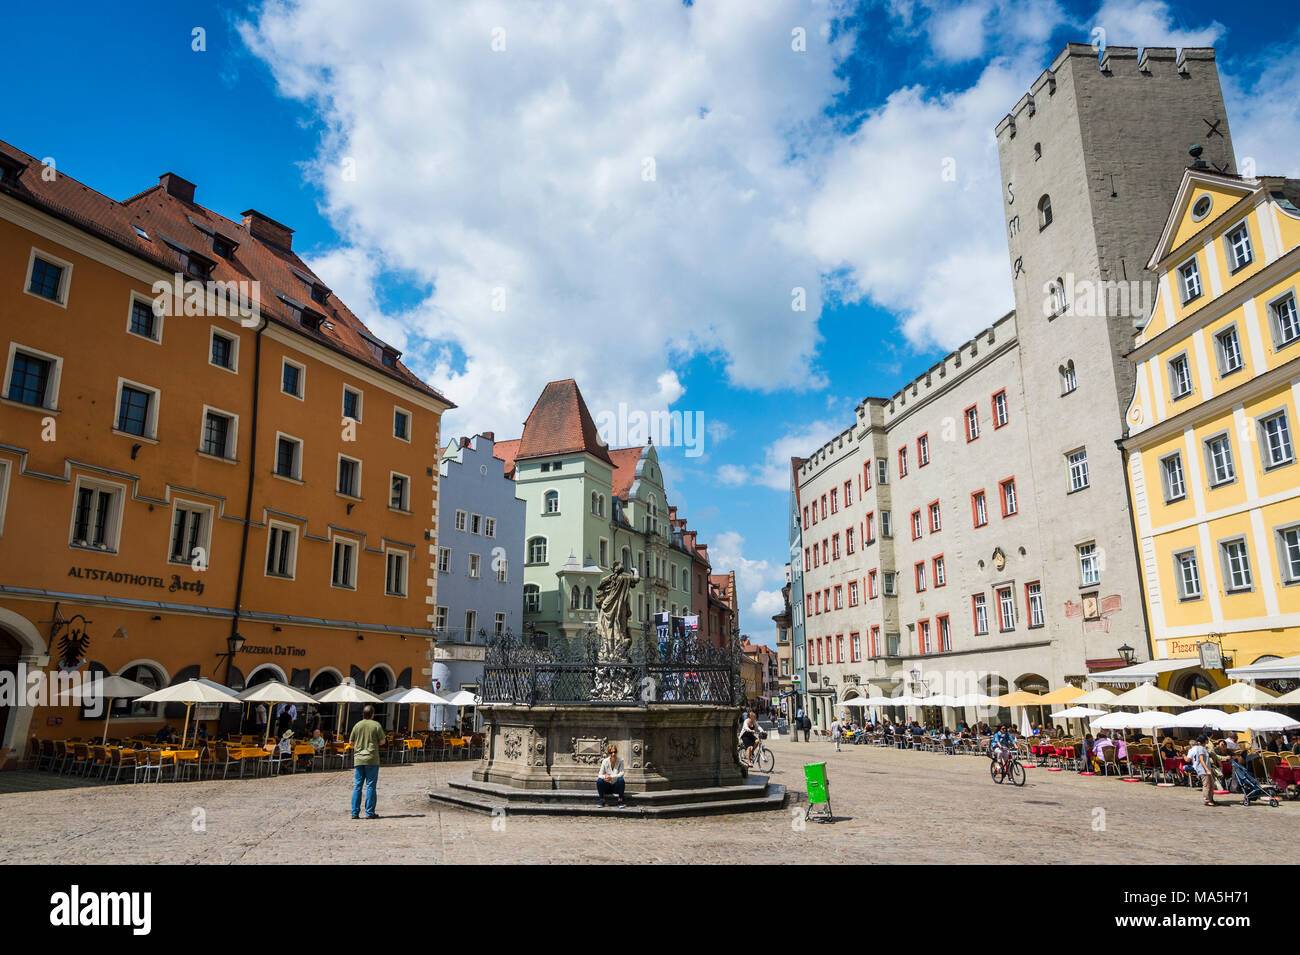 Haidplatz, quadrata con patrimonio mondiale dell'Unesco, Regensburg, Baviera, Germania Foto Stock